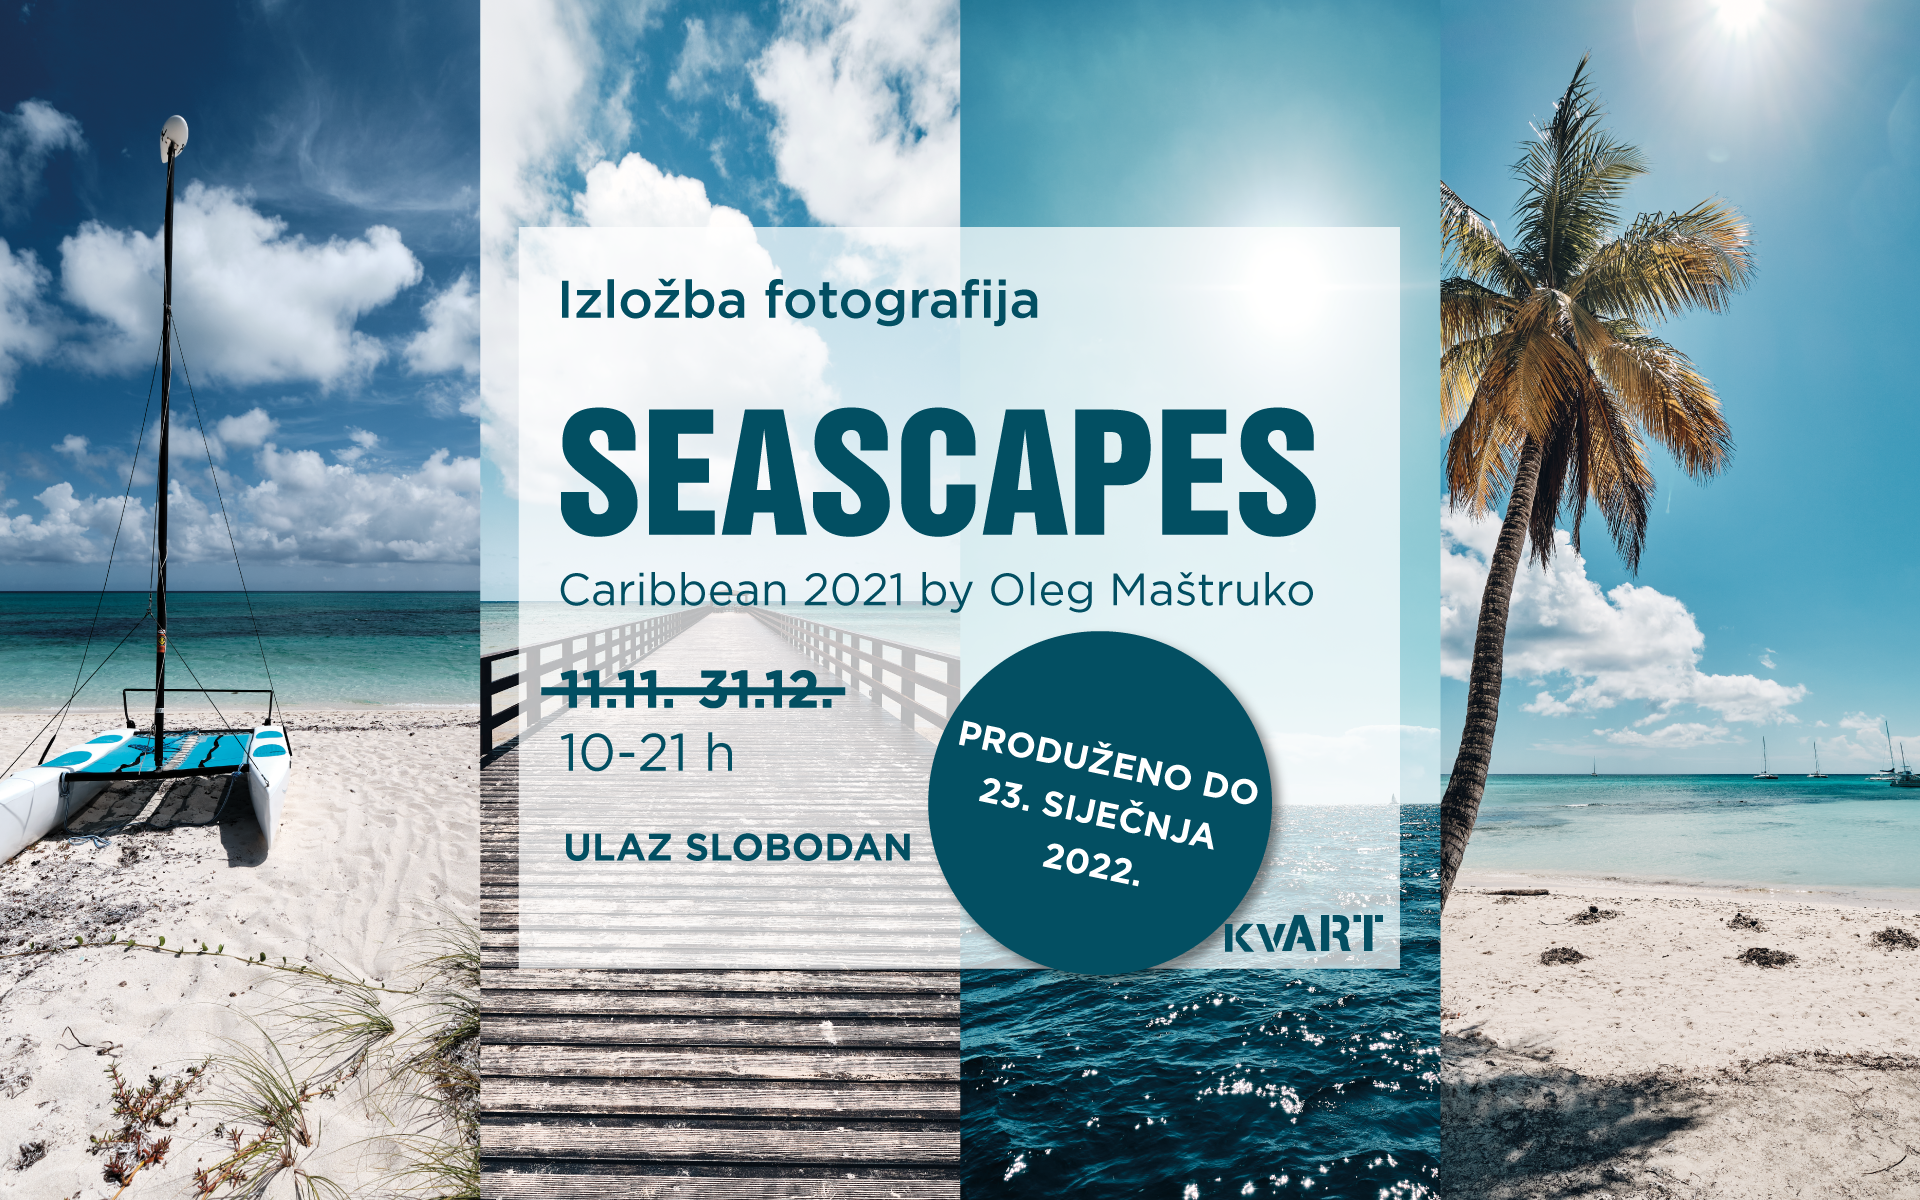 Izložba „SEASCAPES" Caribbean 2021 Olega Maštruka ostaje otvorena do 23.siječnja 2022.